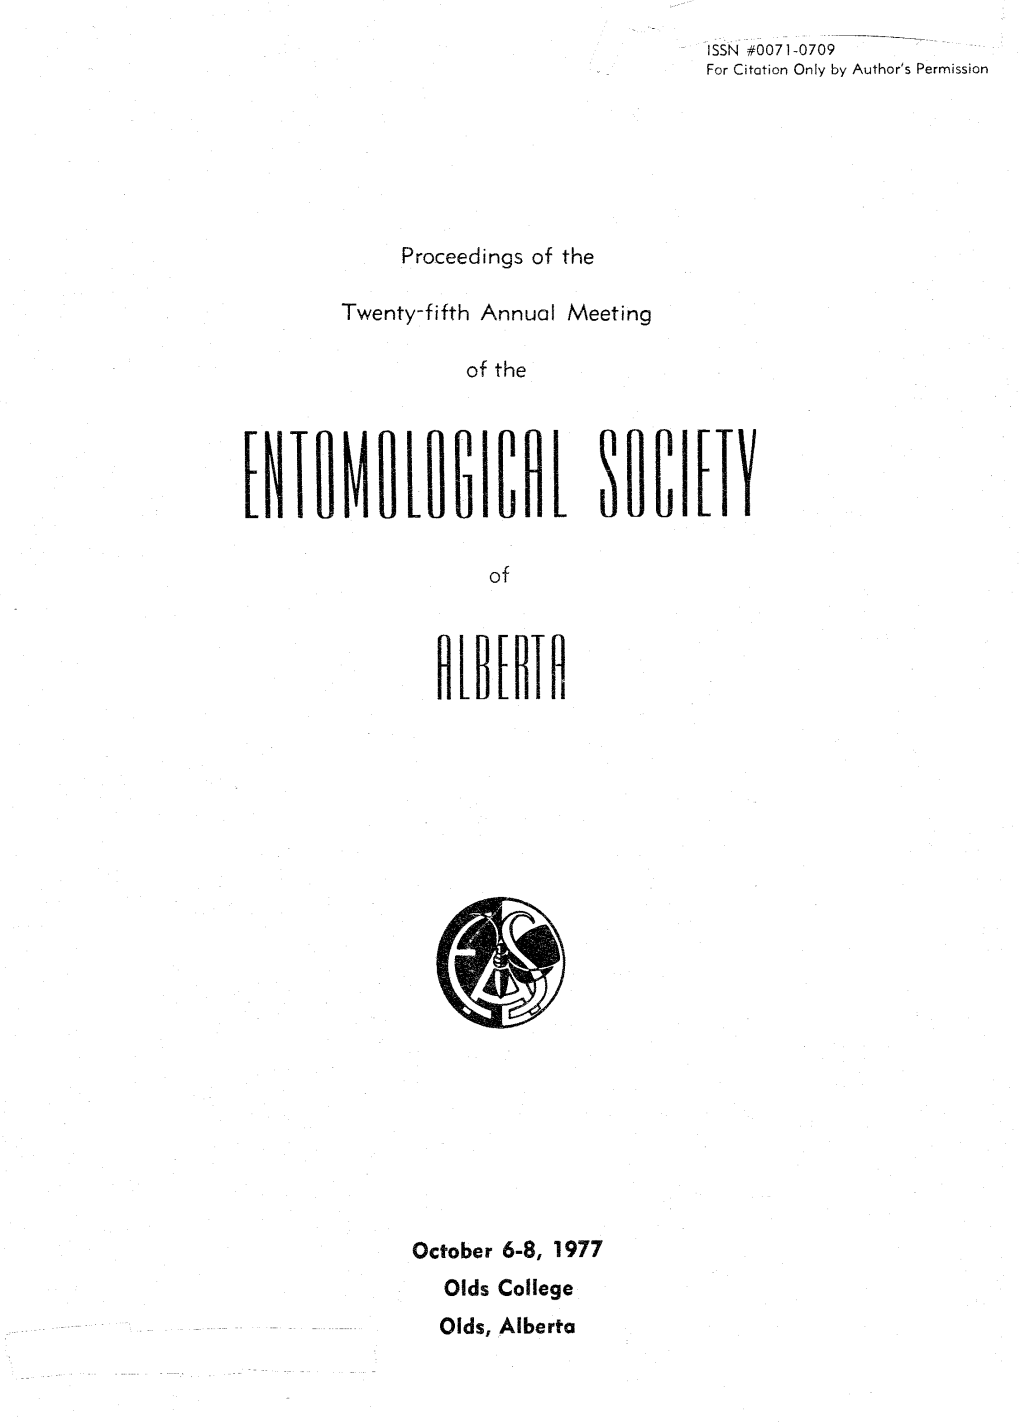 Proceedings of the Entomological Society of Alberta 1977